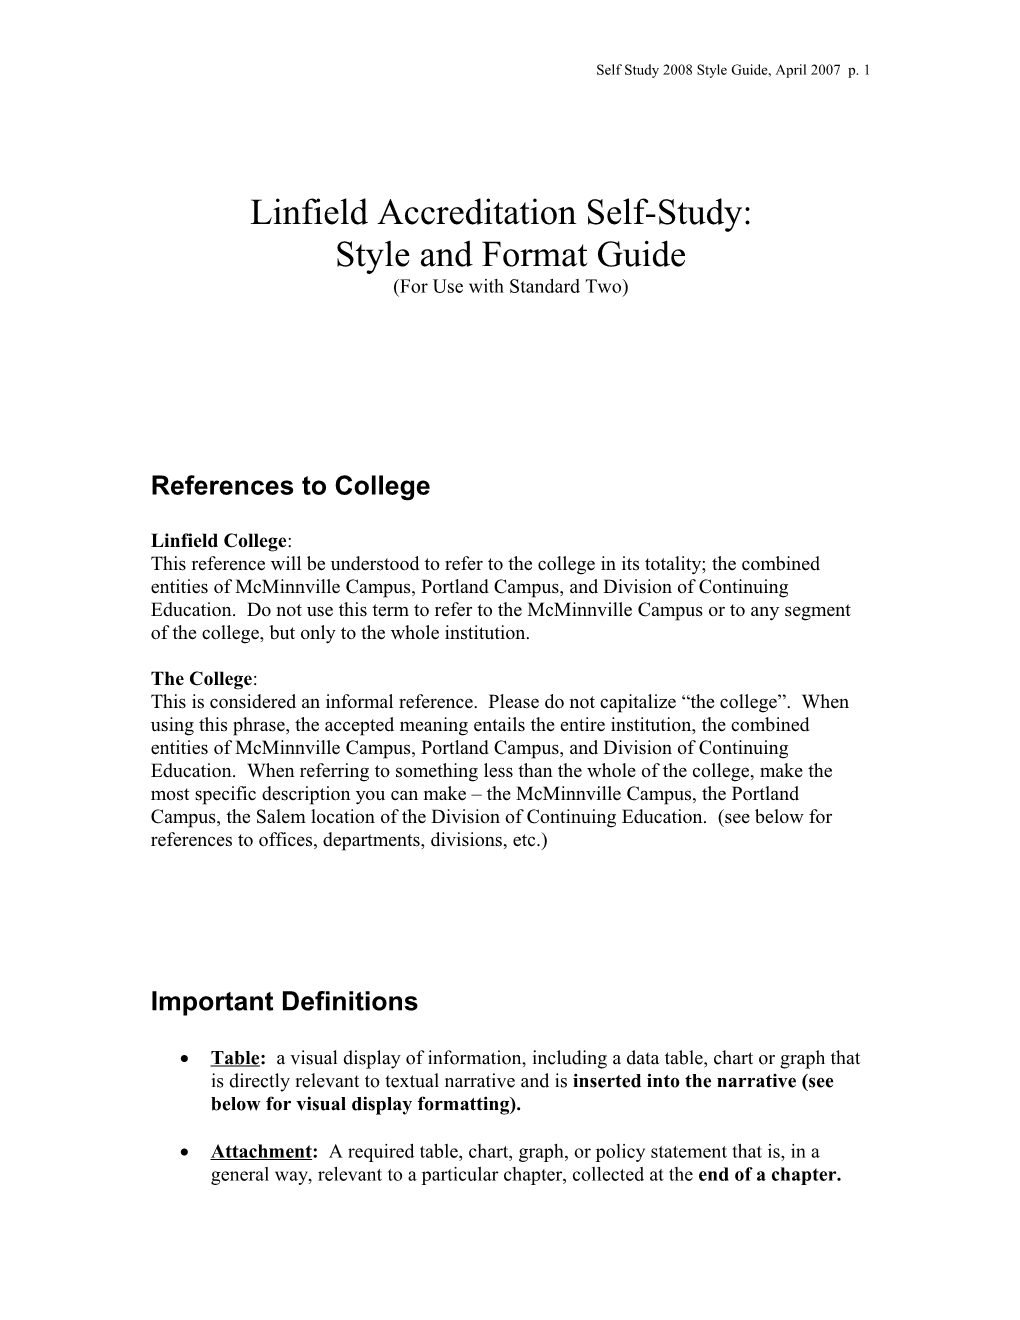 Linfield Accreditation Self-Study